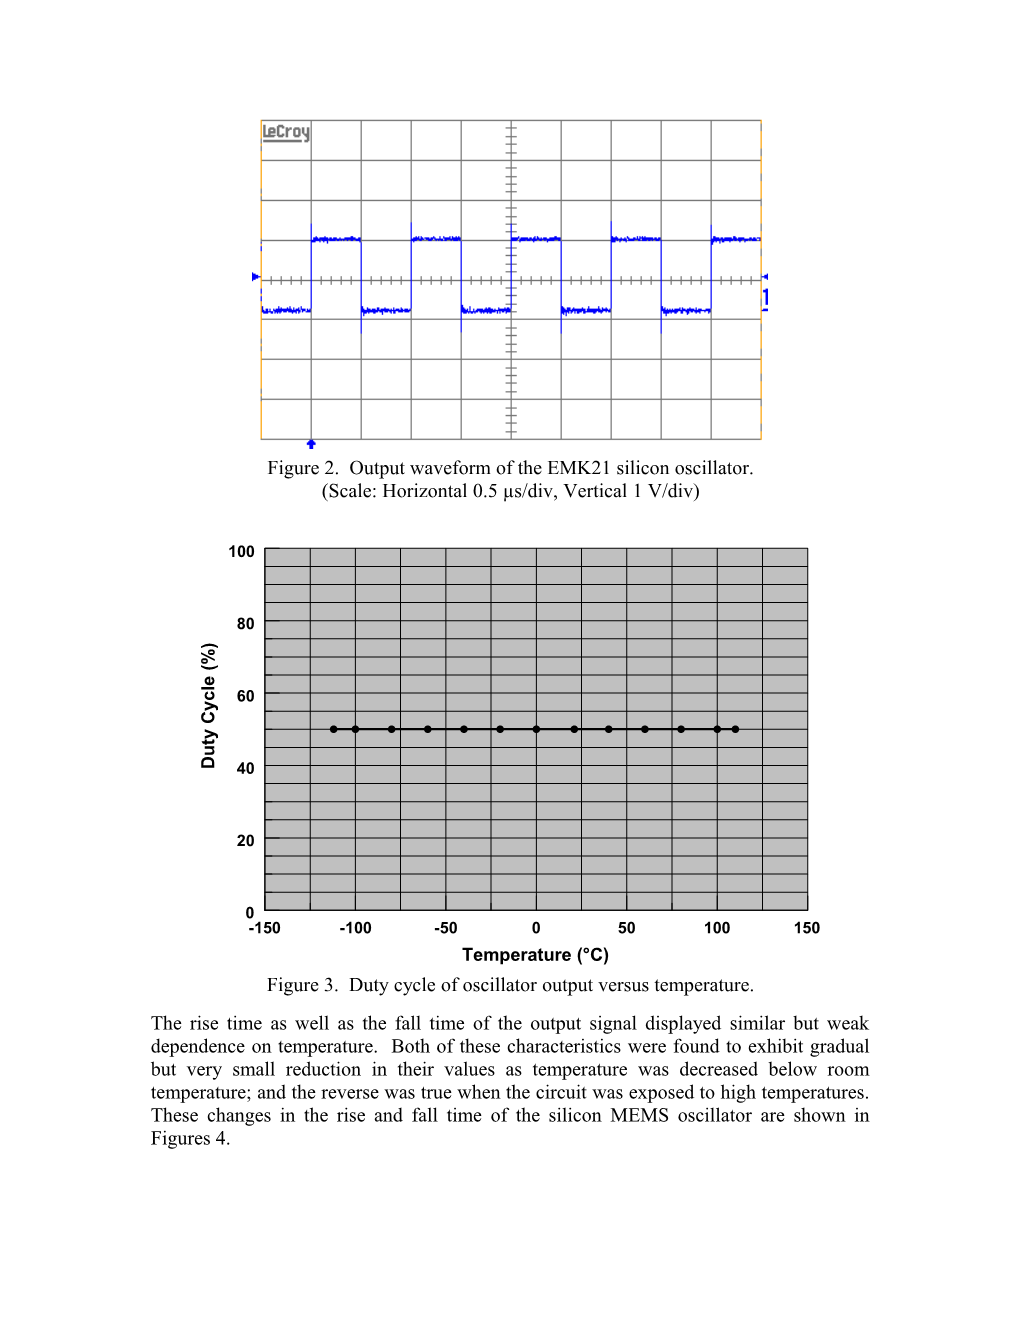 Assessment of Operation of EMK21 MEMS Silicon Oscillator Over Wide Temperature Range